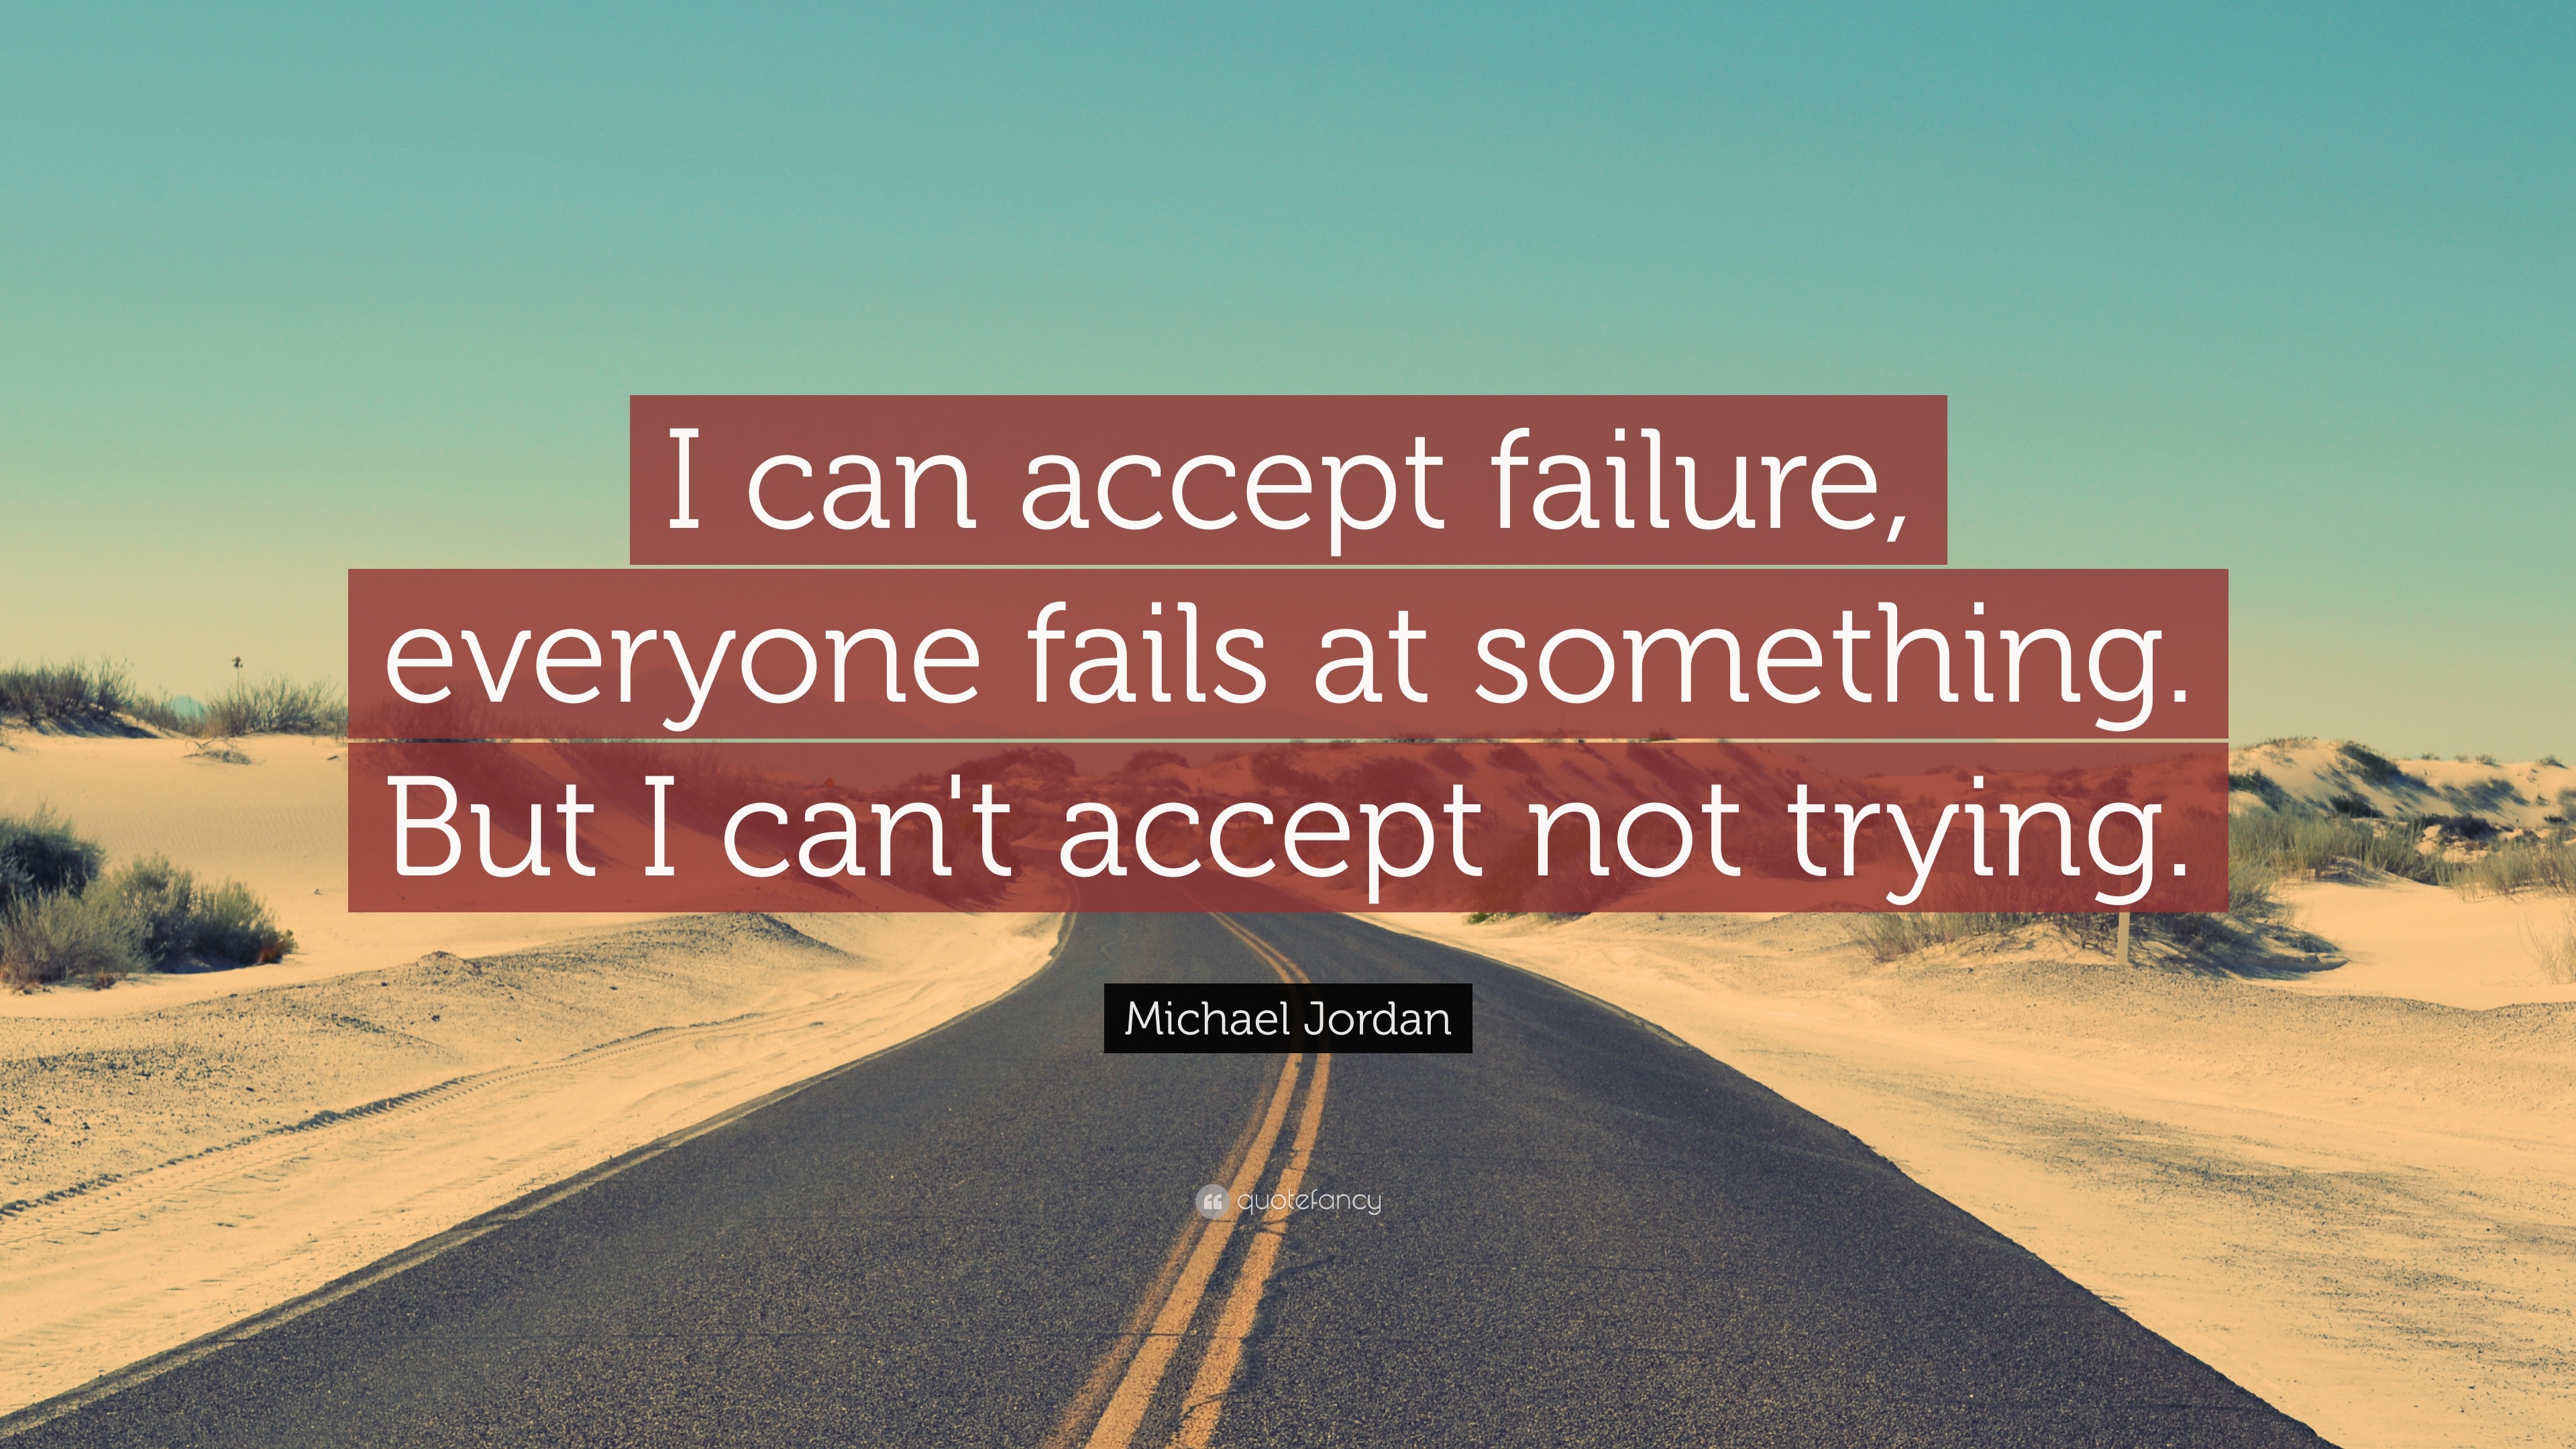 Michael Jordan Quote “I can accept failure, everyone